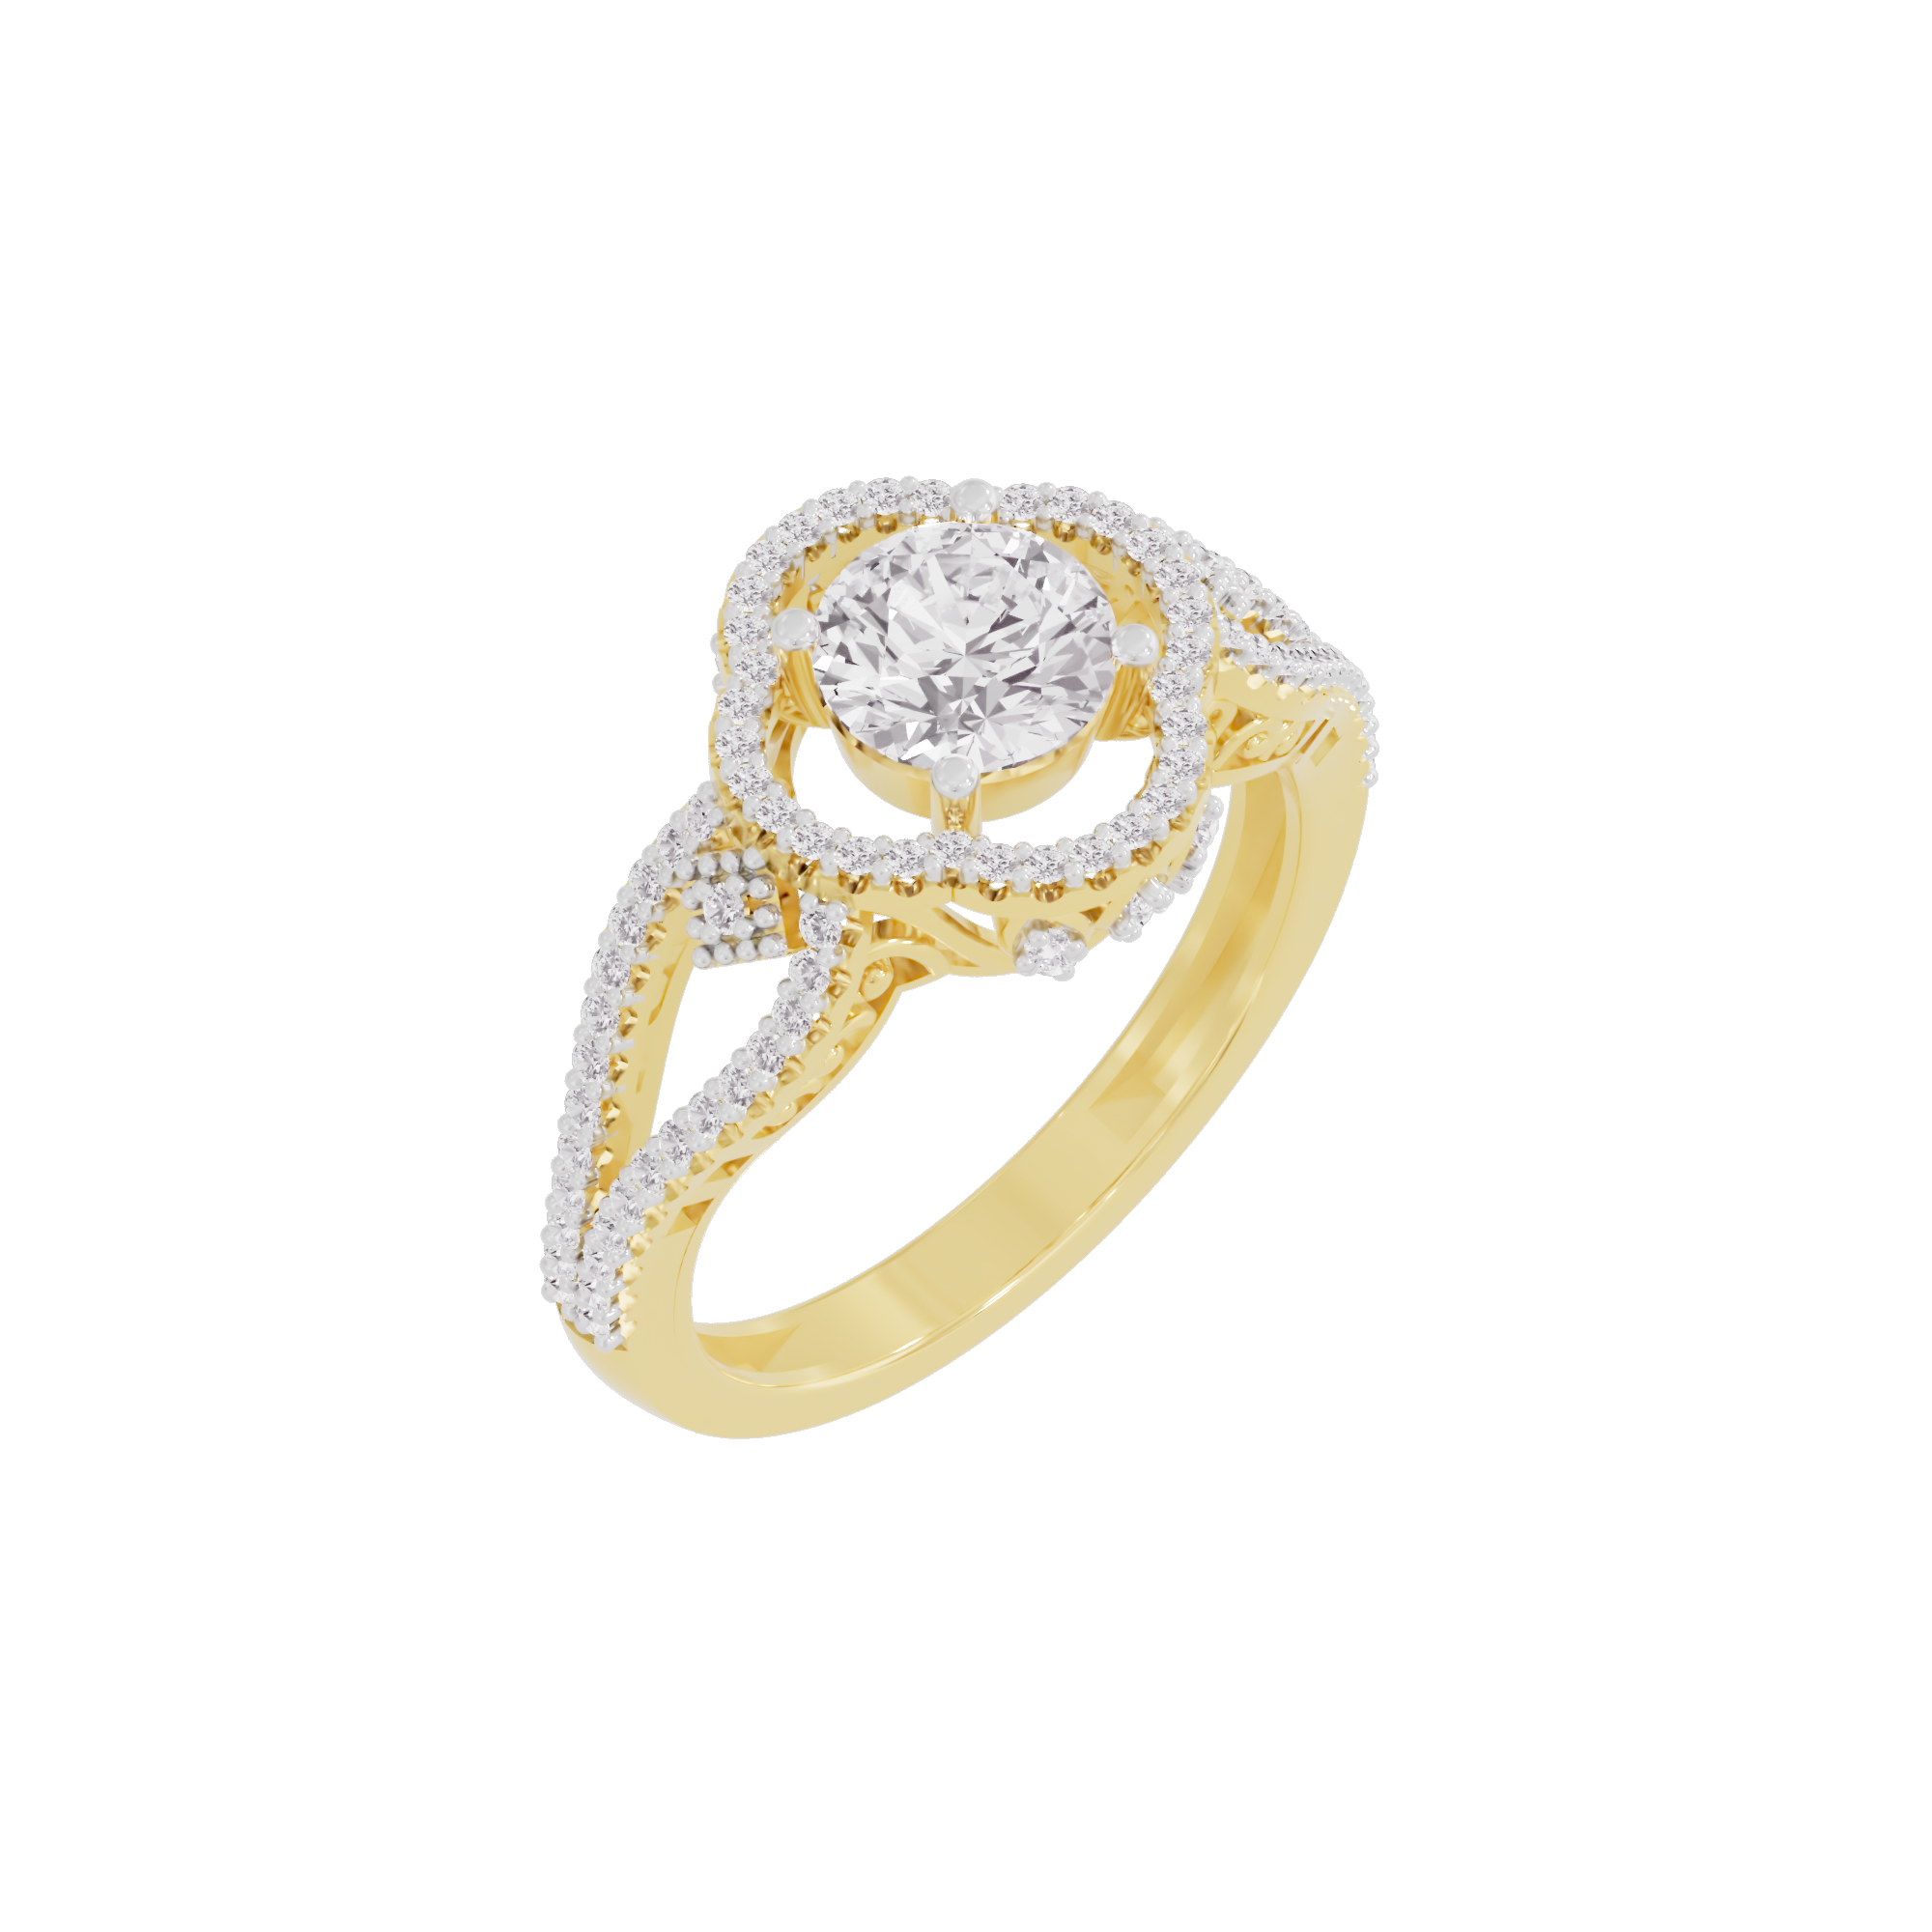 Supreme Panache Diamond Ring